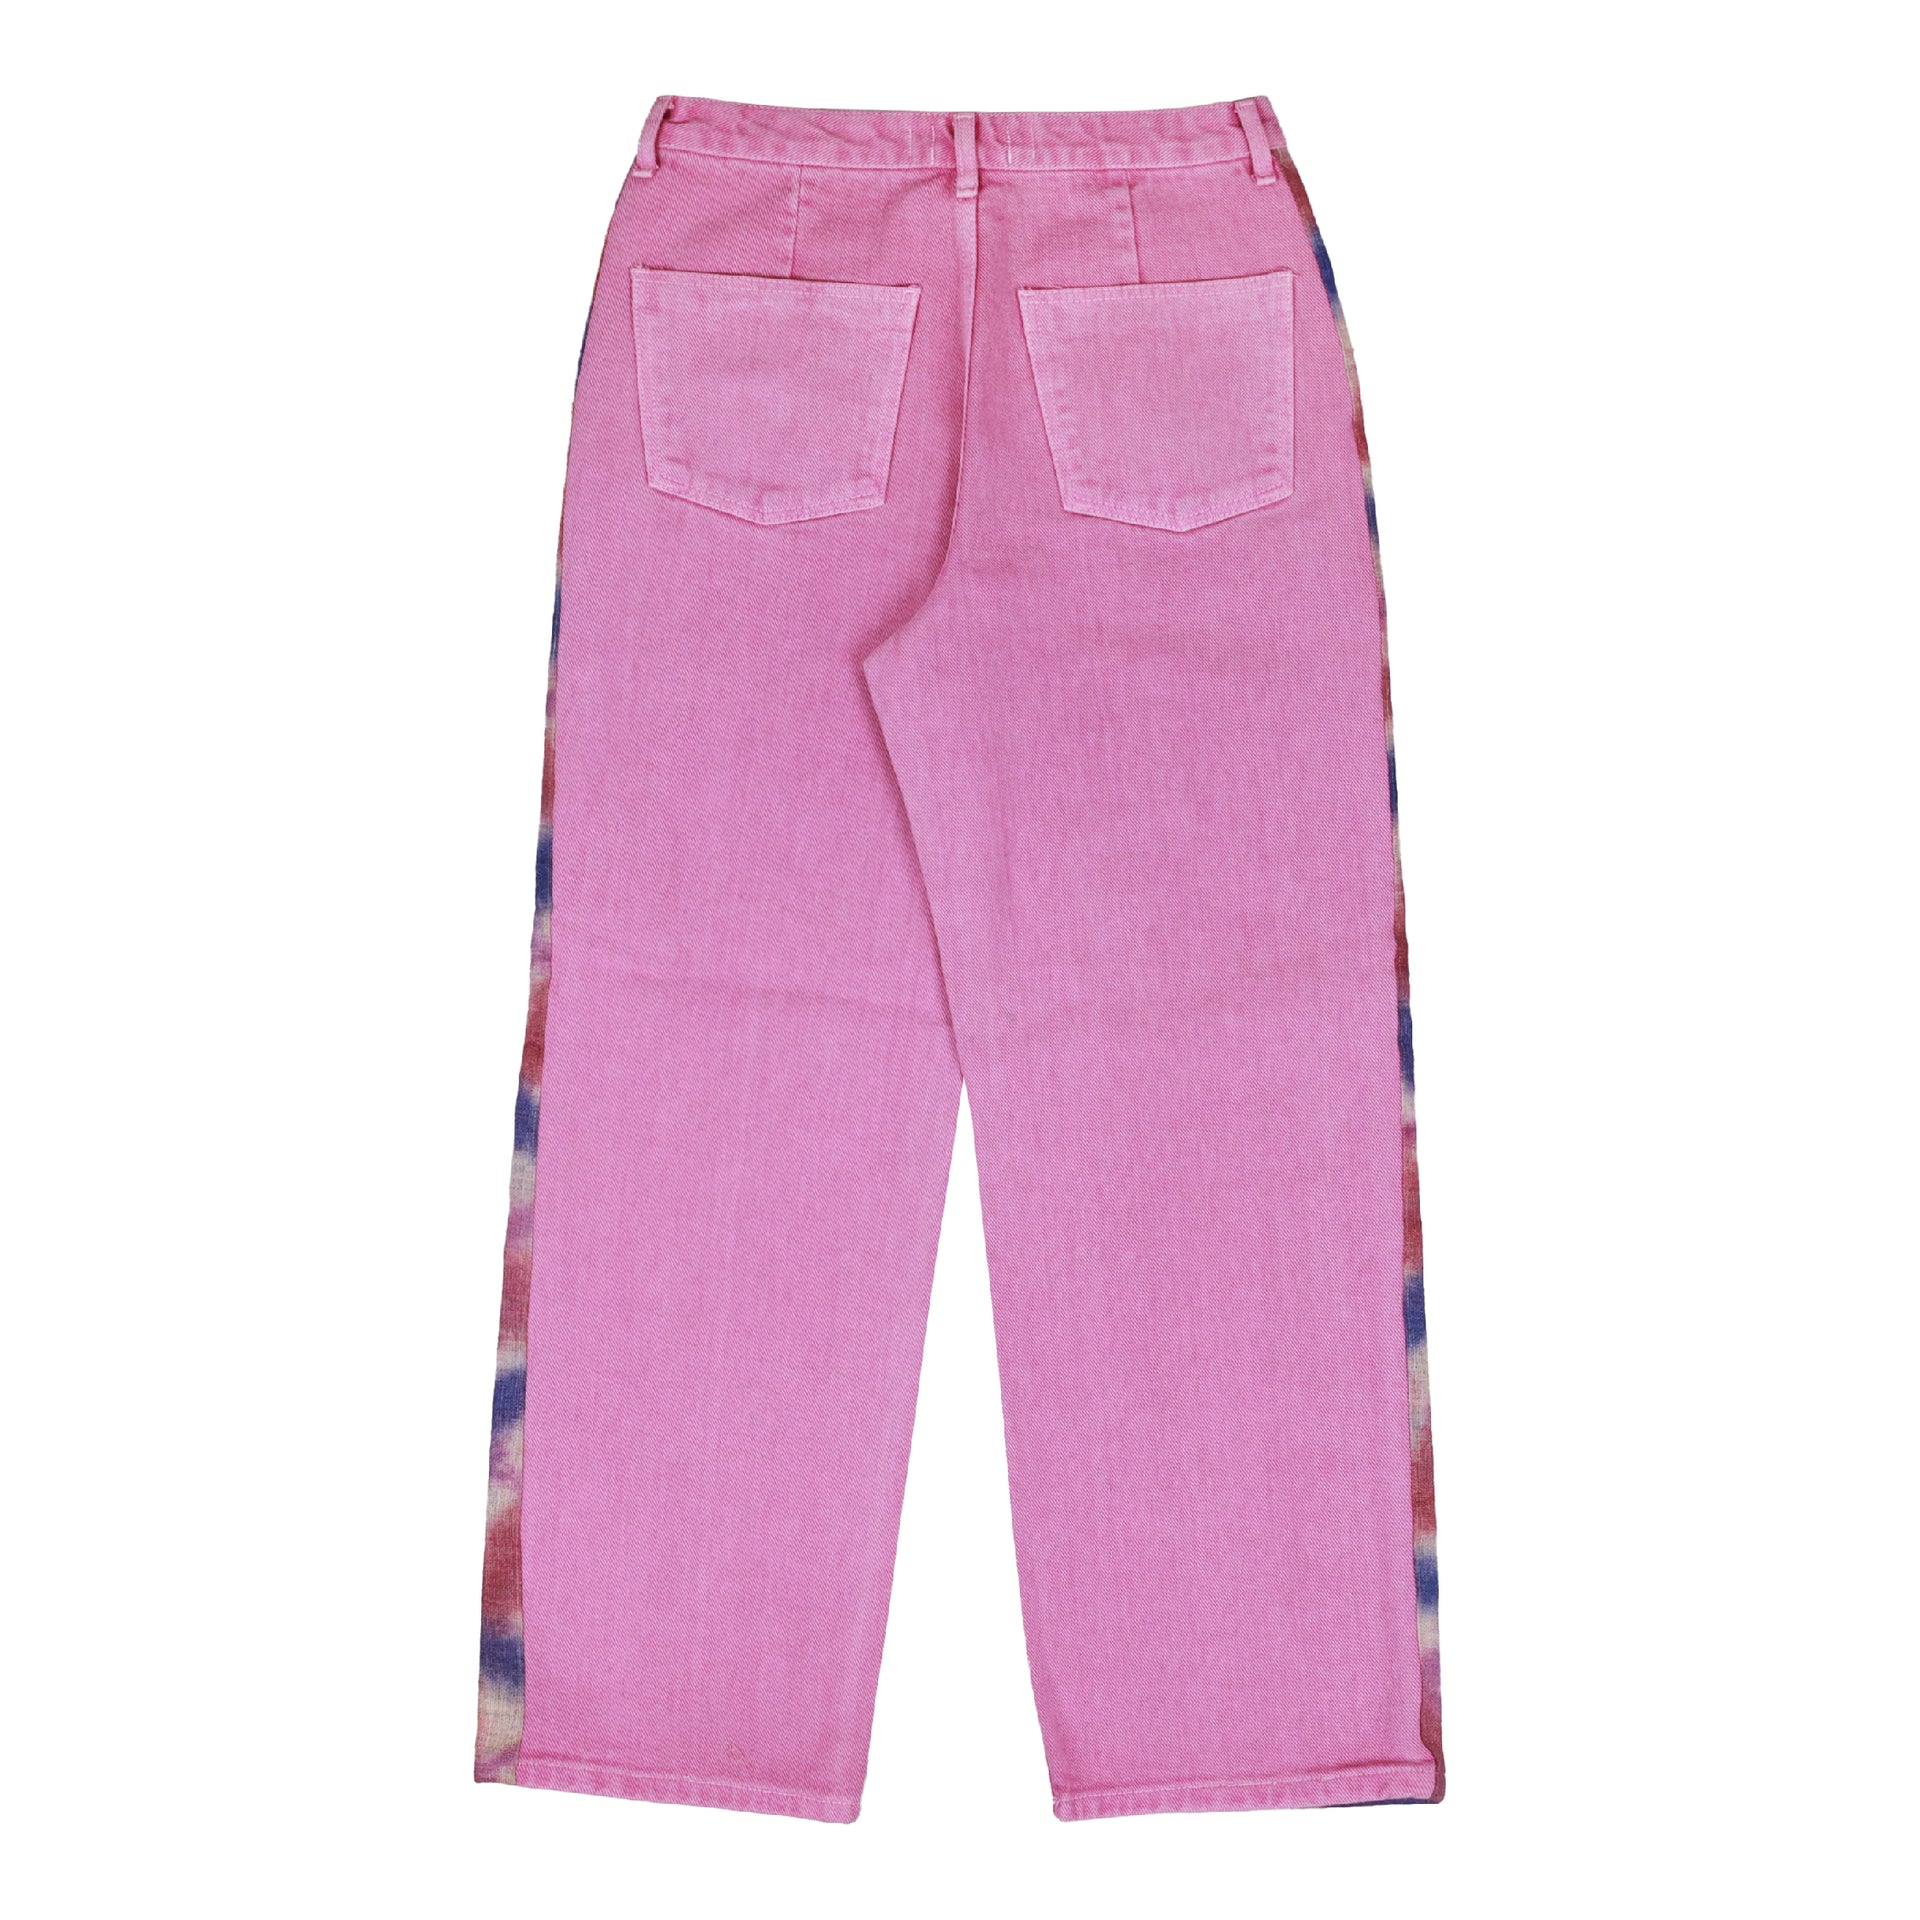 The Pink Bangkok Jeans